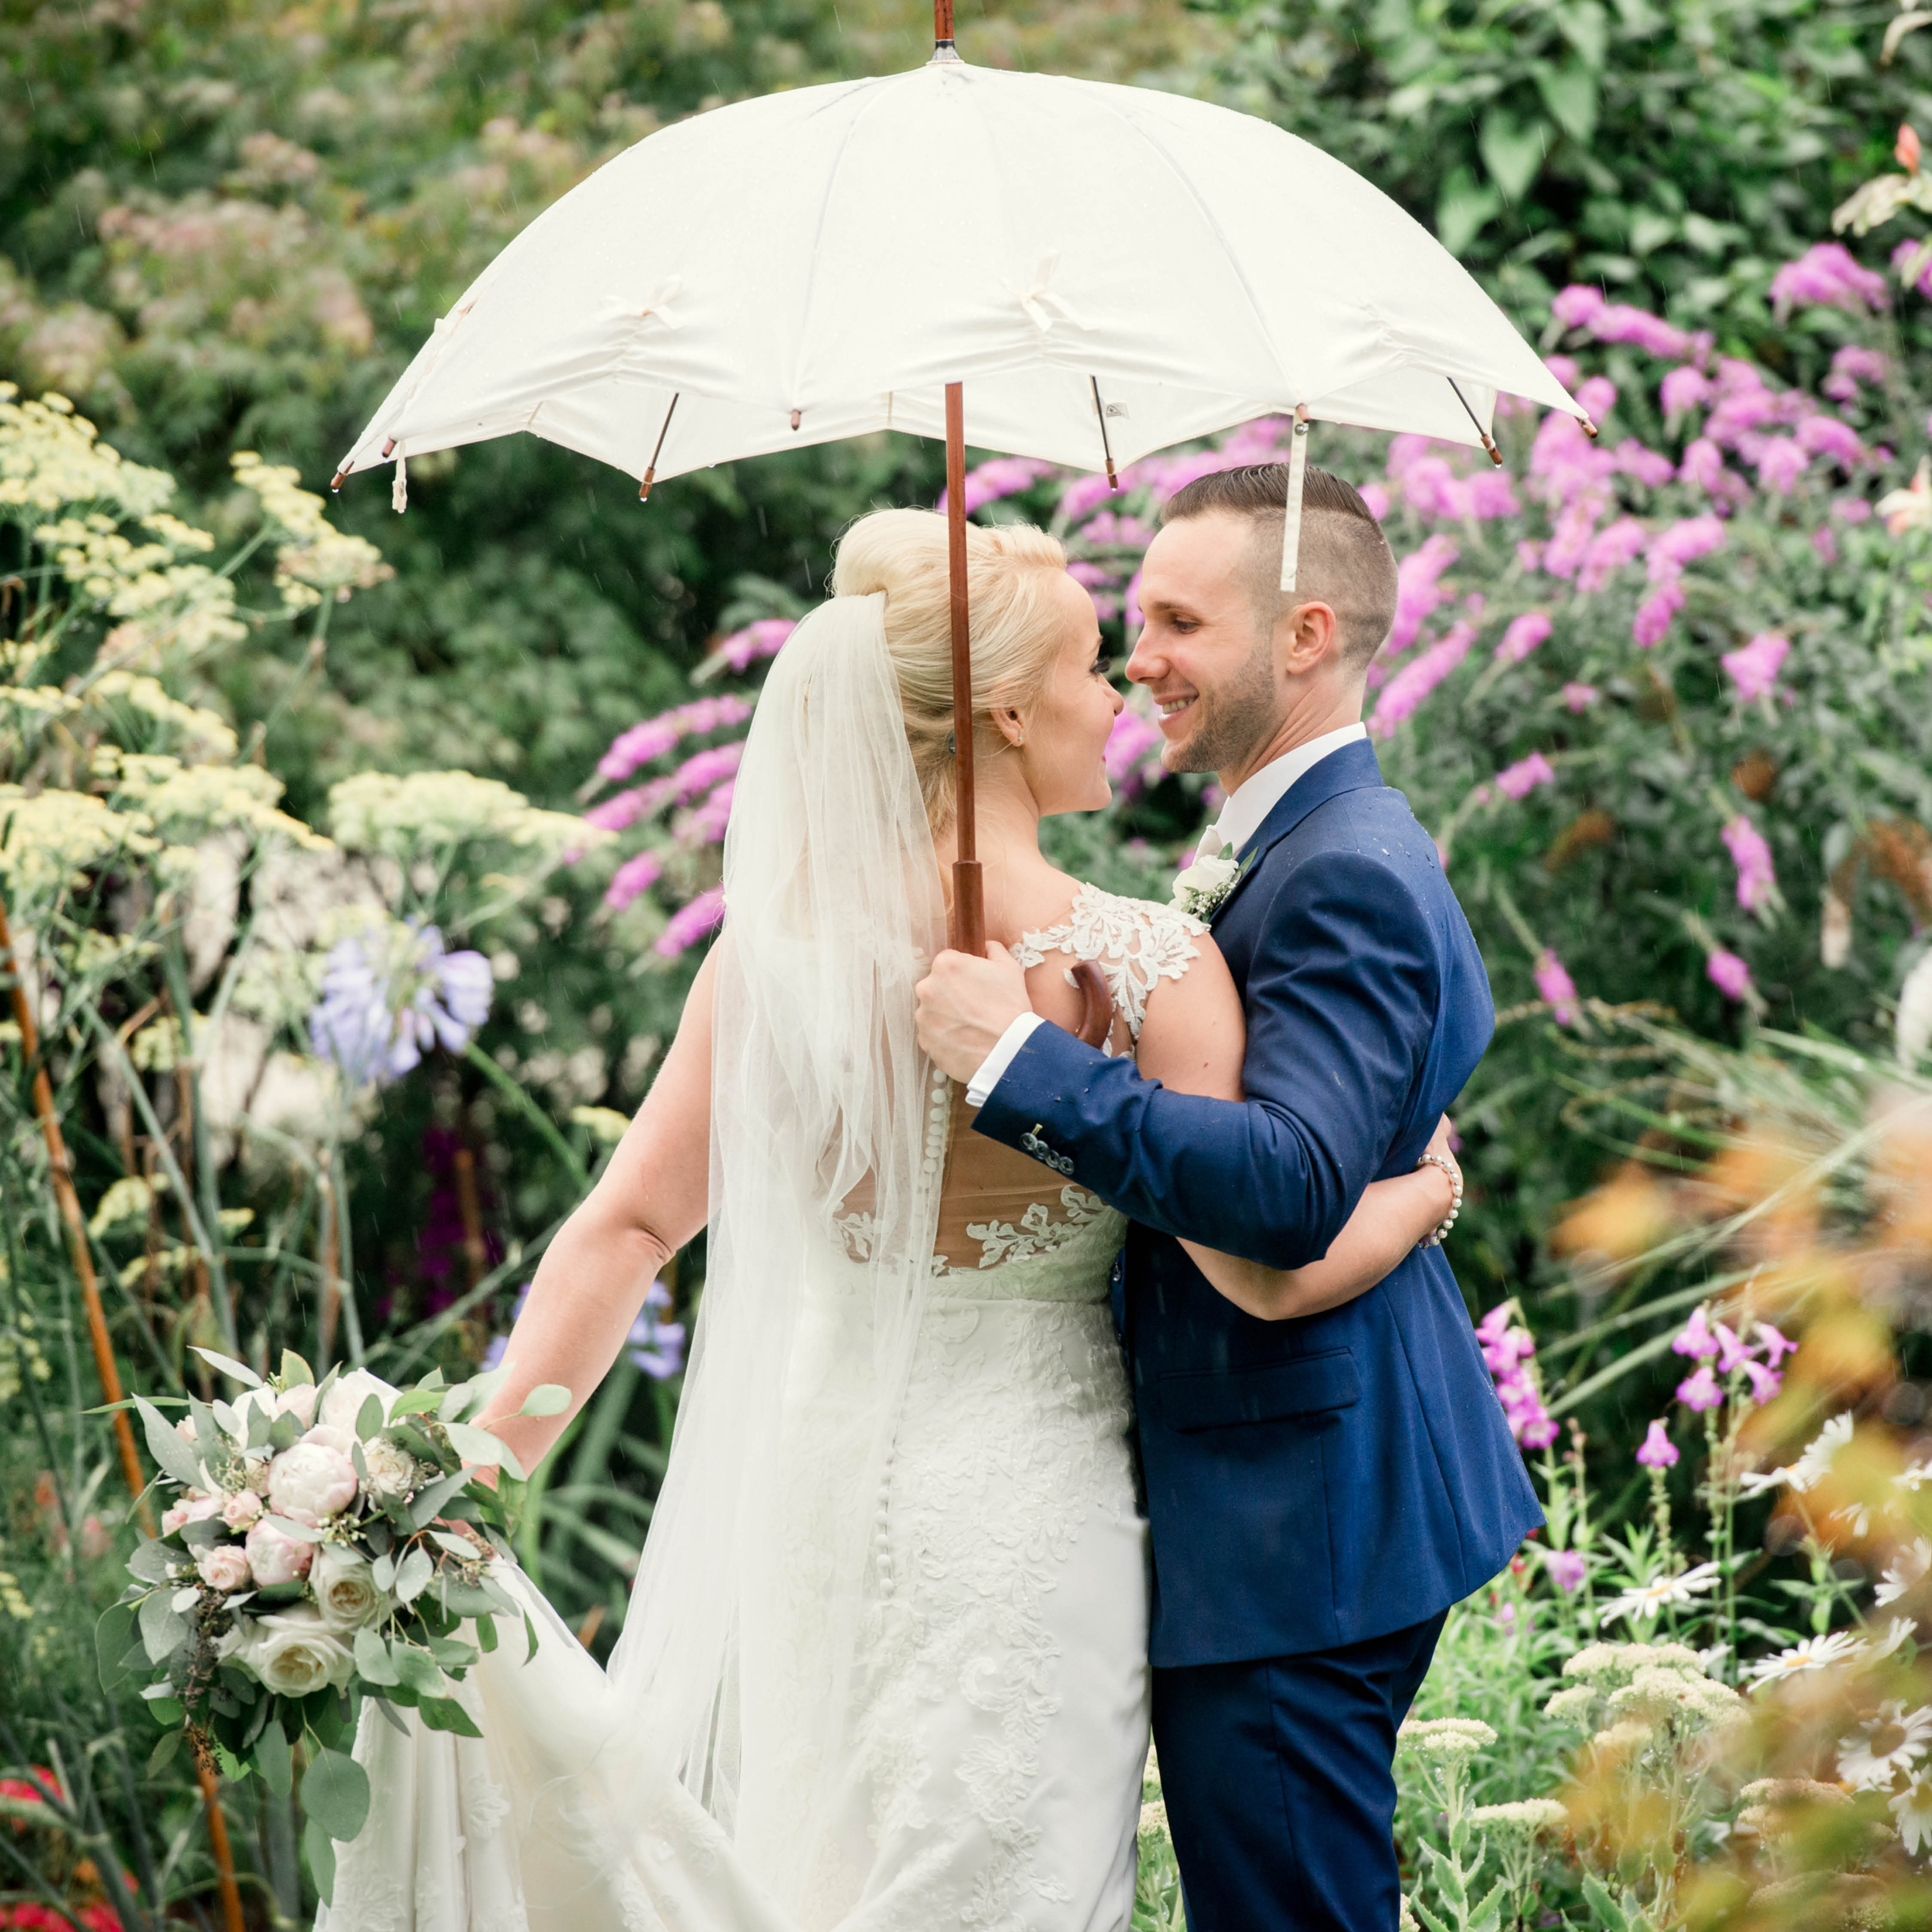 Plan for Rain on Your Wedding Day, wedding indoor photos